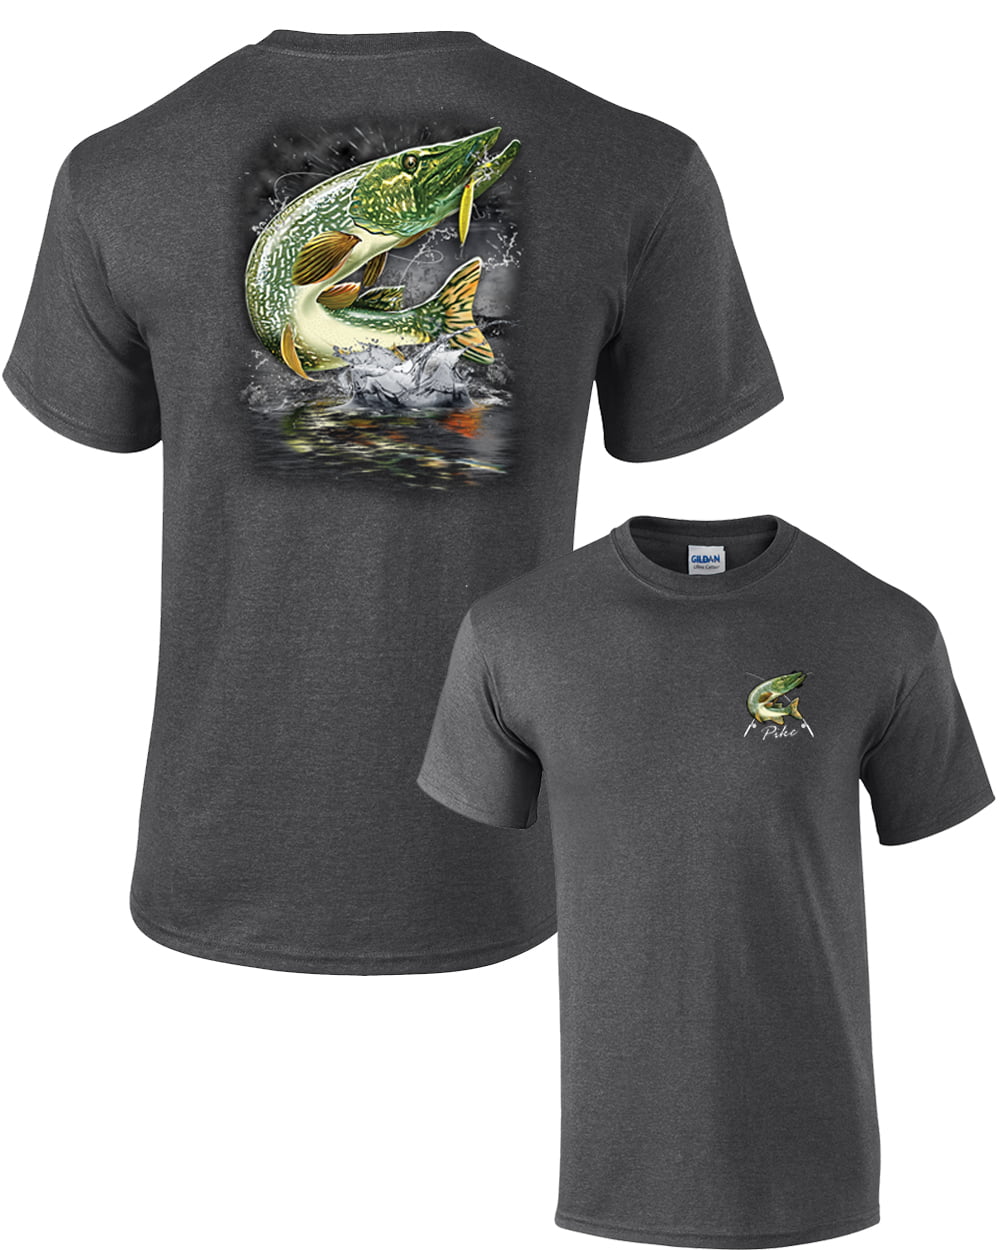 Adult Fishing Short Sleeve T-shirt Jumping Pike-Military-5Xl 